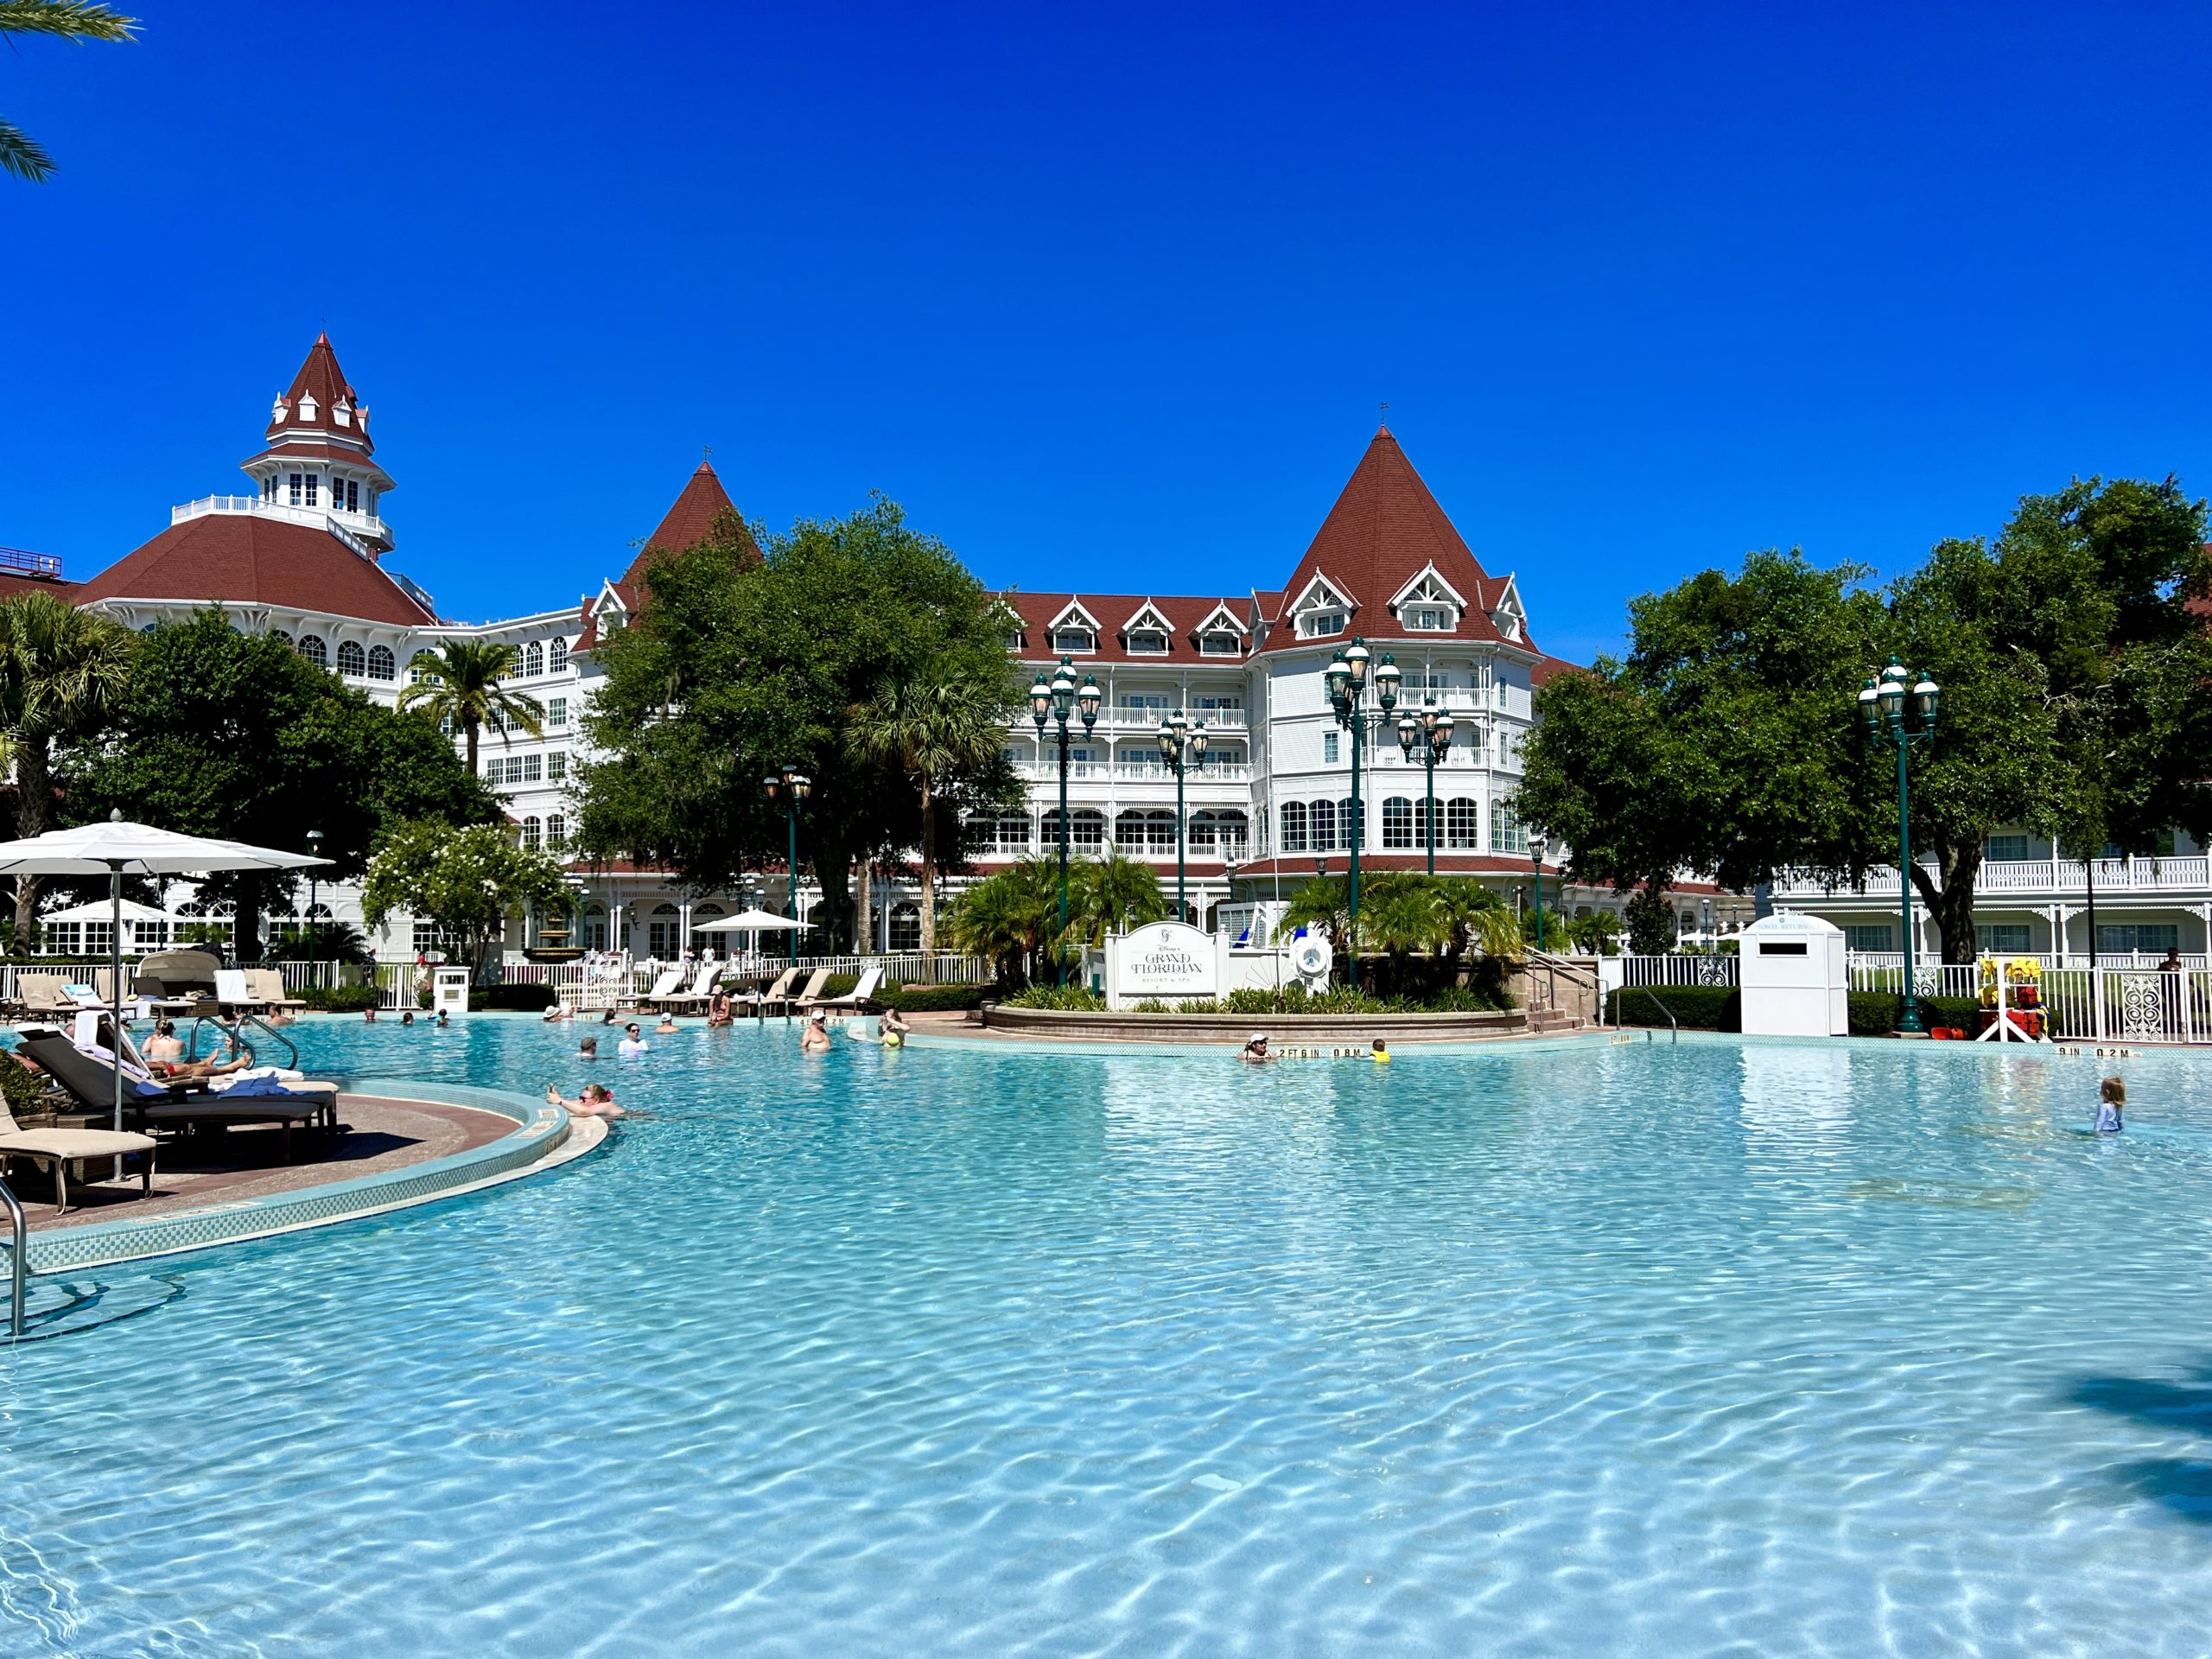 Disney's Grand Floridian resort